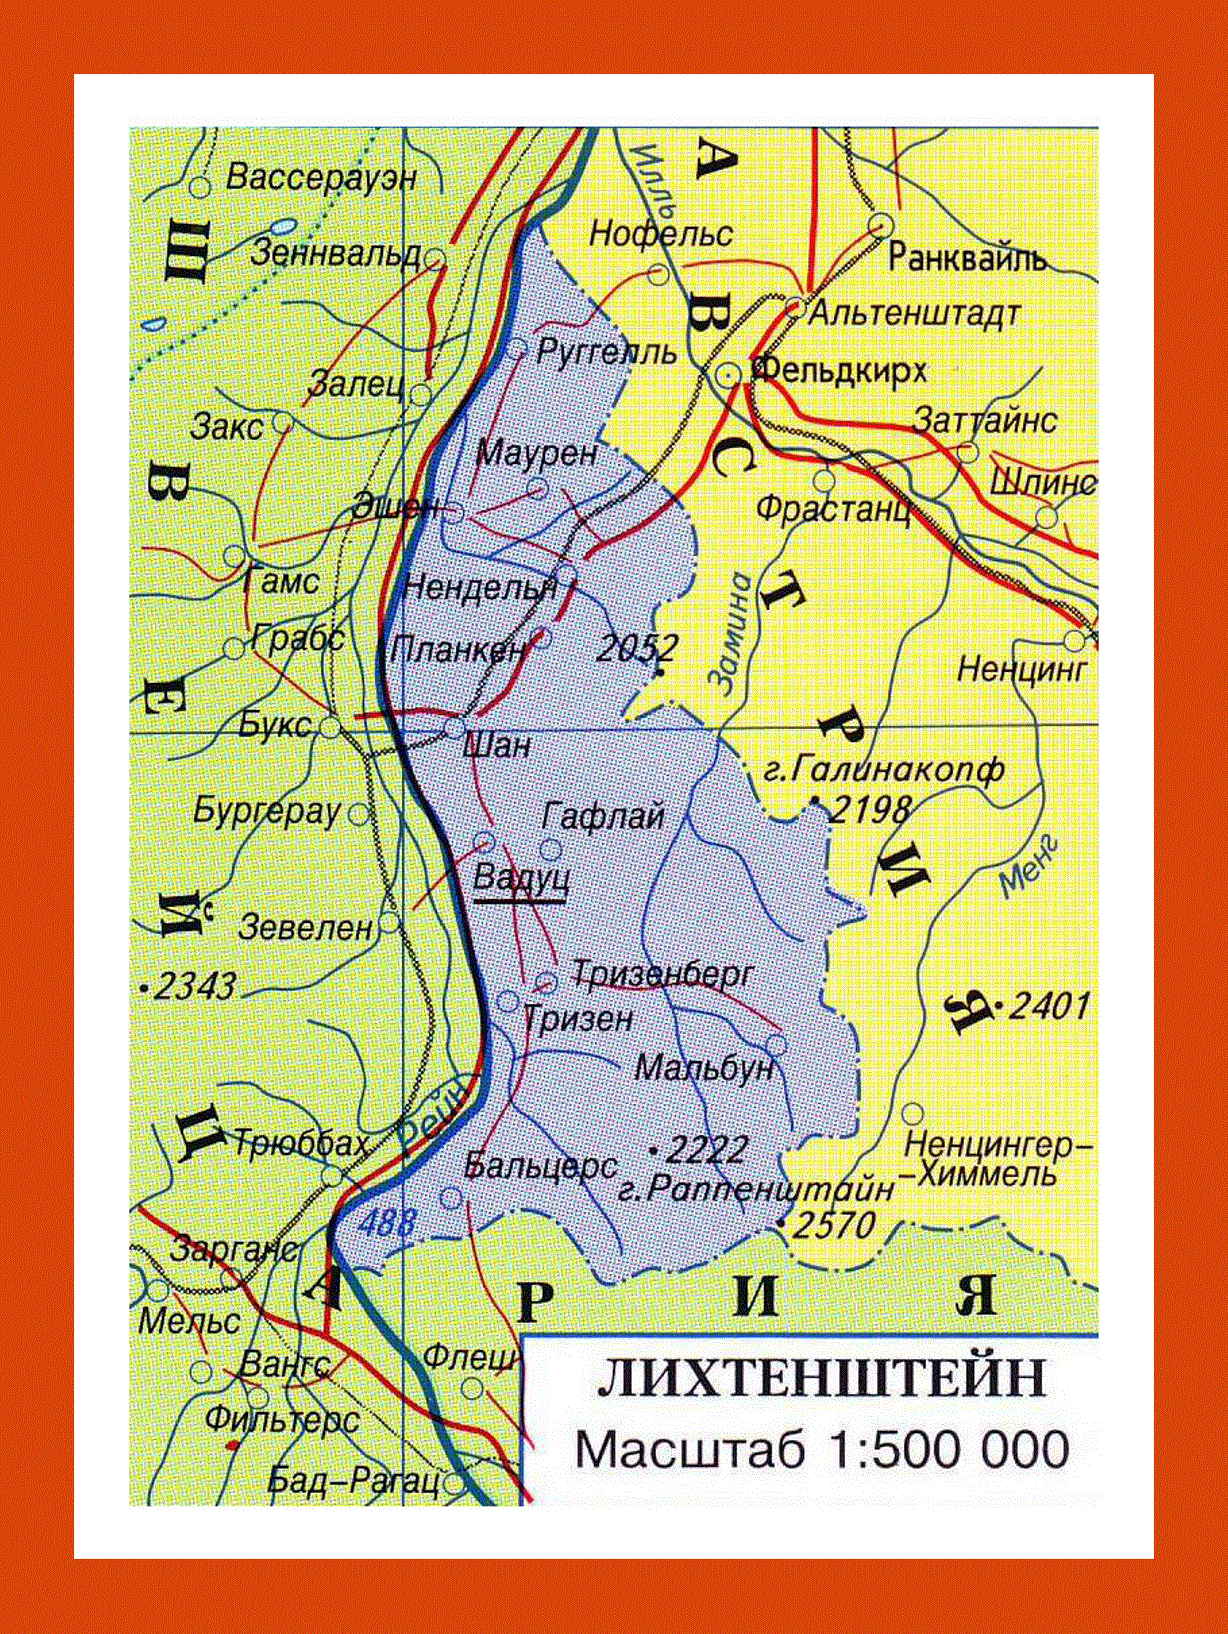 Map of Liechtenstein in russian